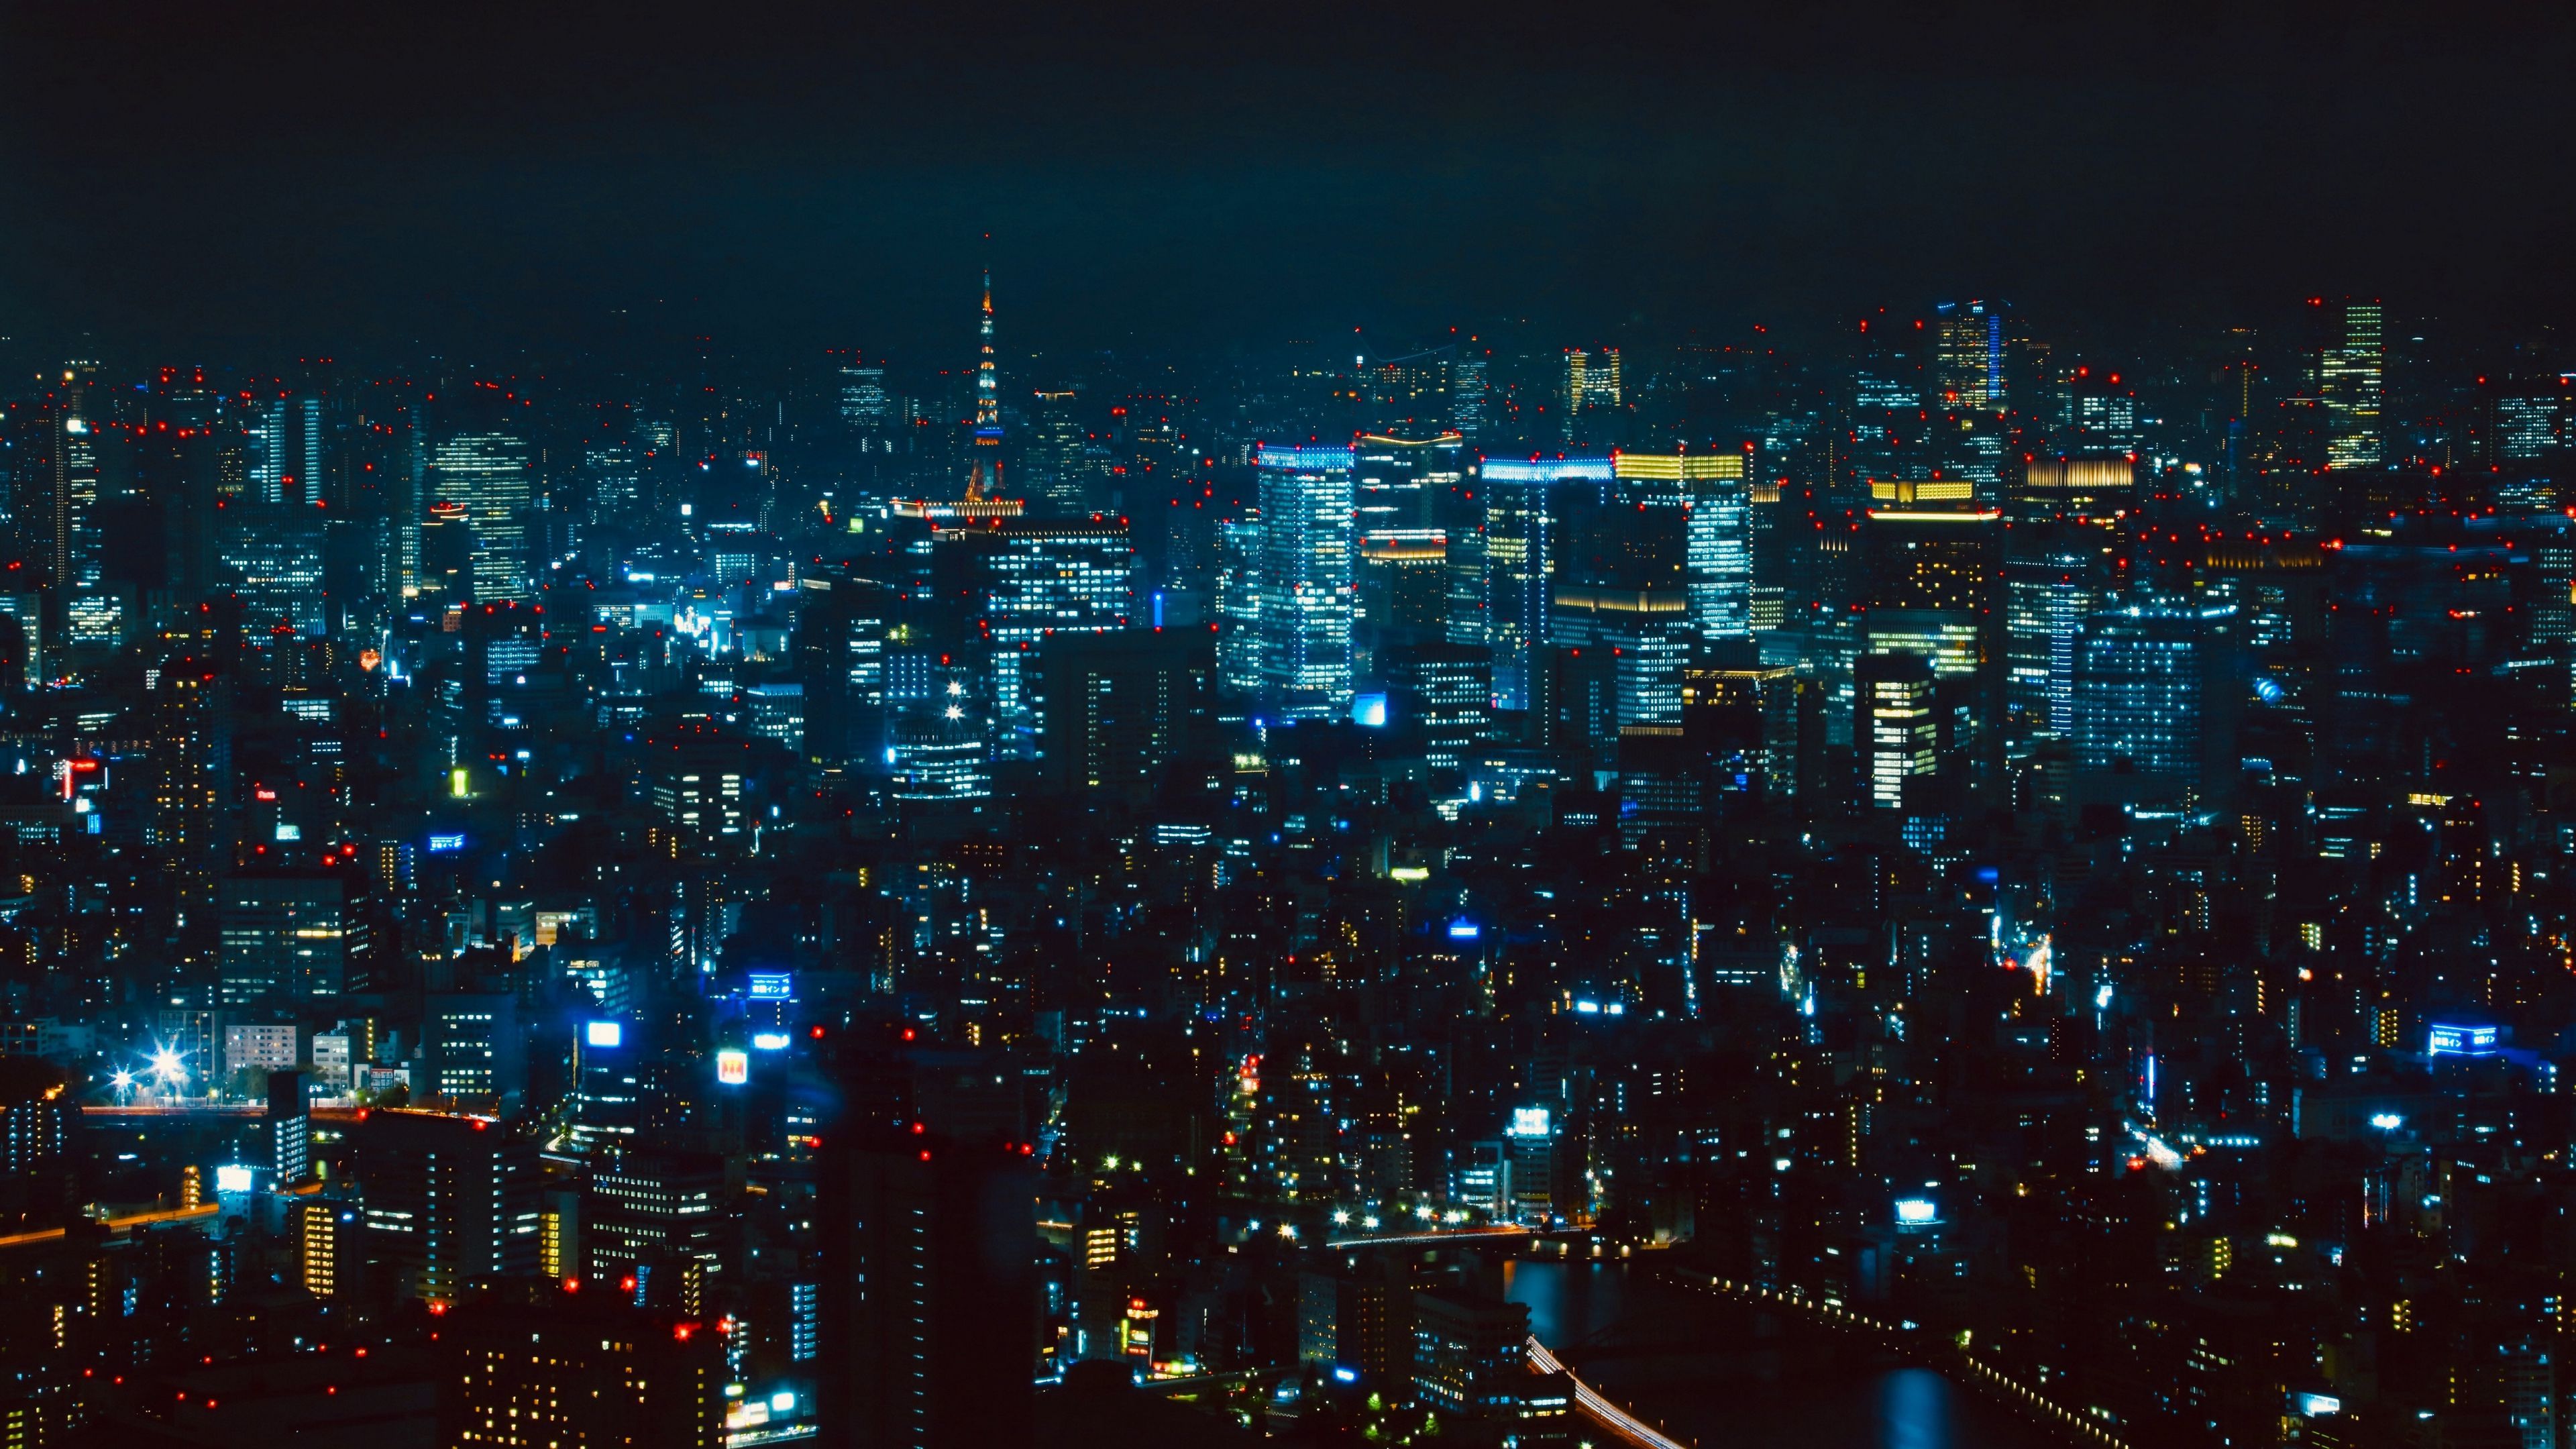 Download wallpaper 3840x2160 night city, aerial view, tokyo, city